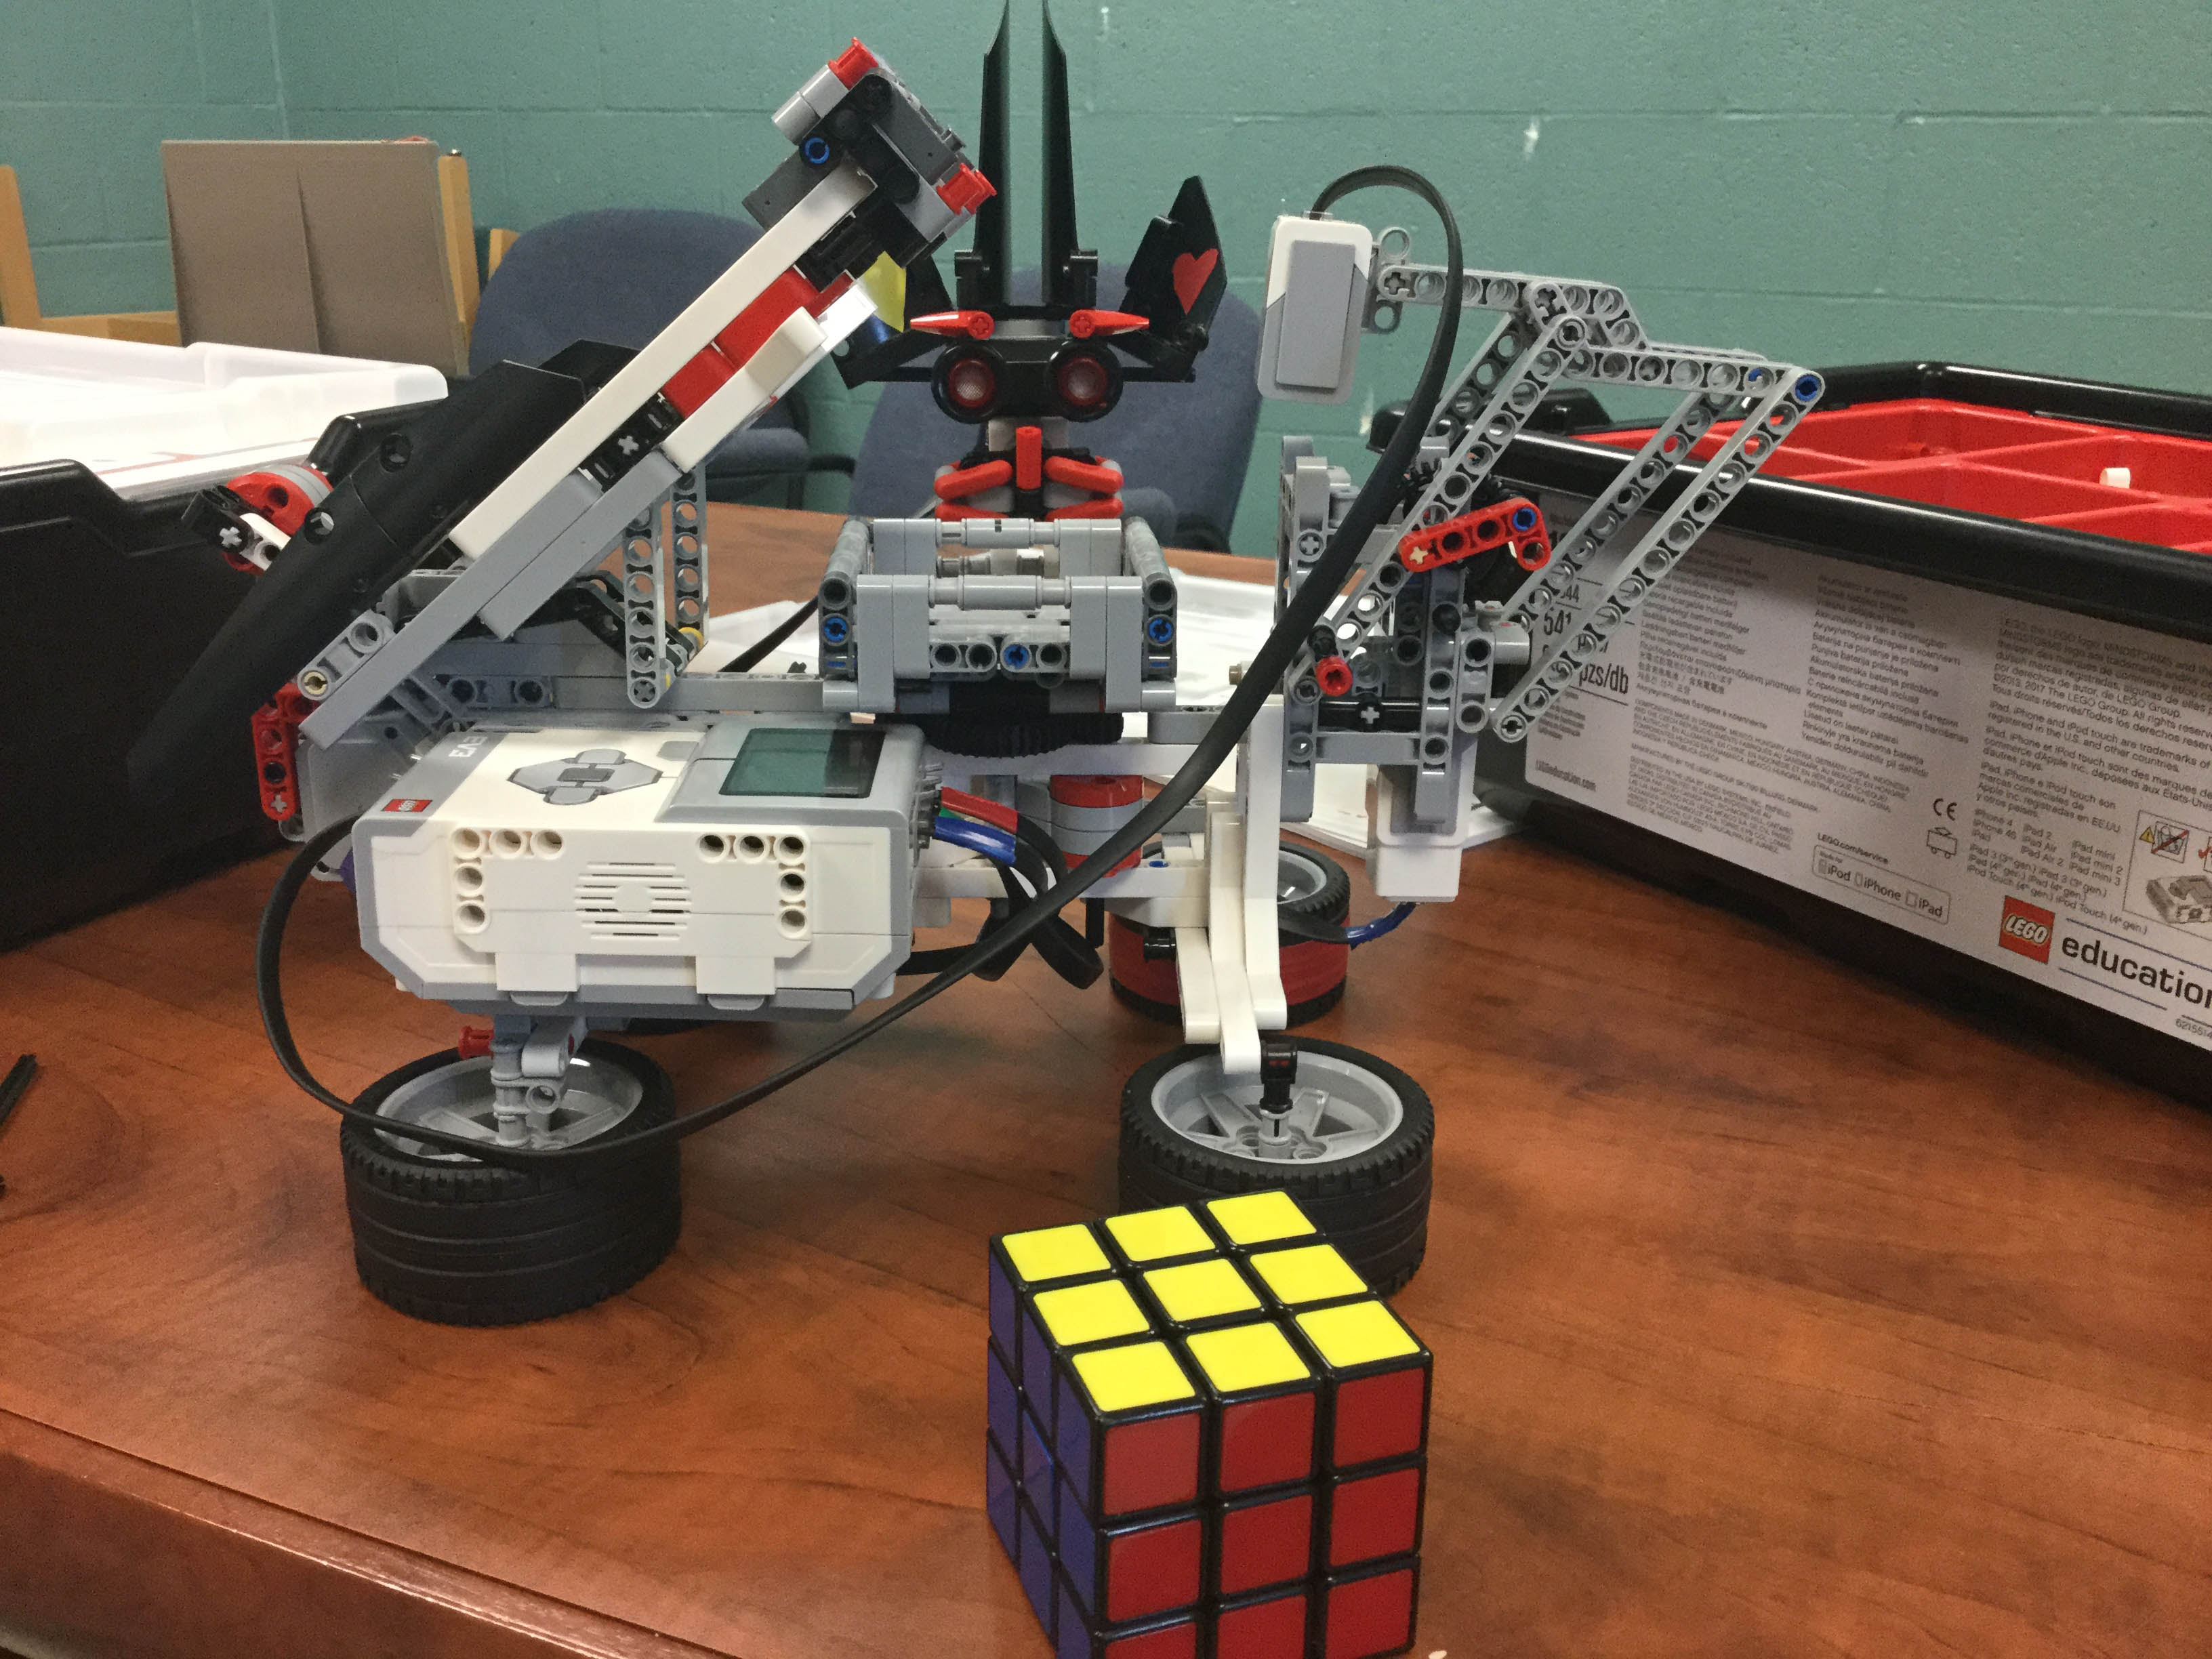 St. Mary CSS robotics club pits machine against teen in Rubik's Cube  challenge - PVNCCDSB